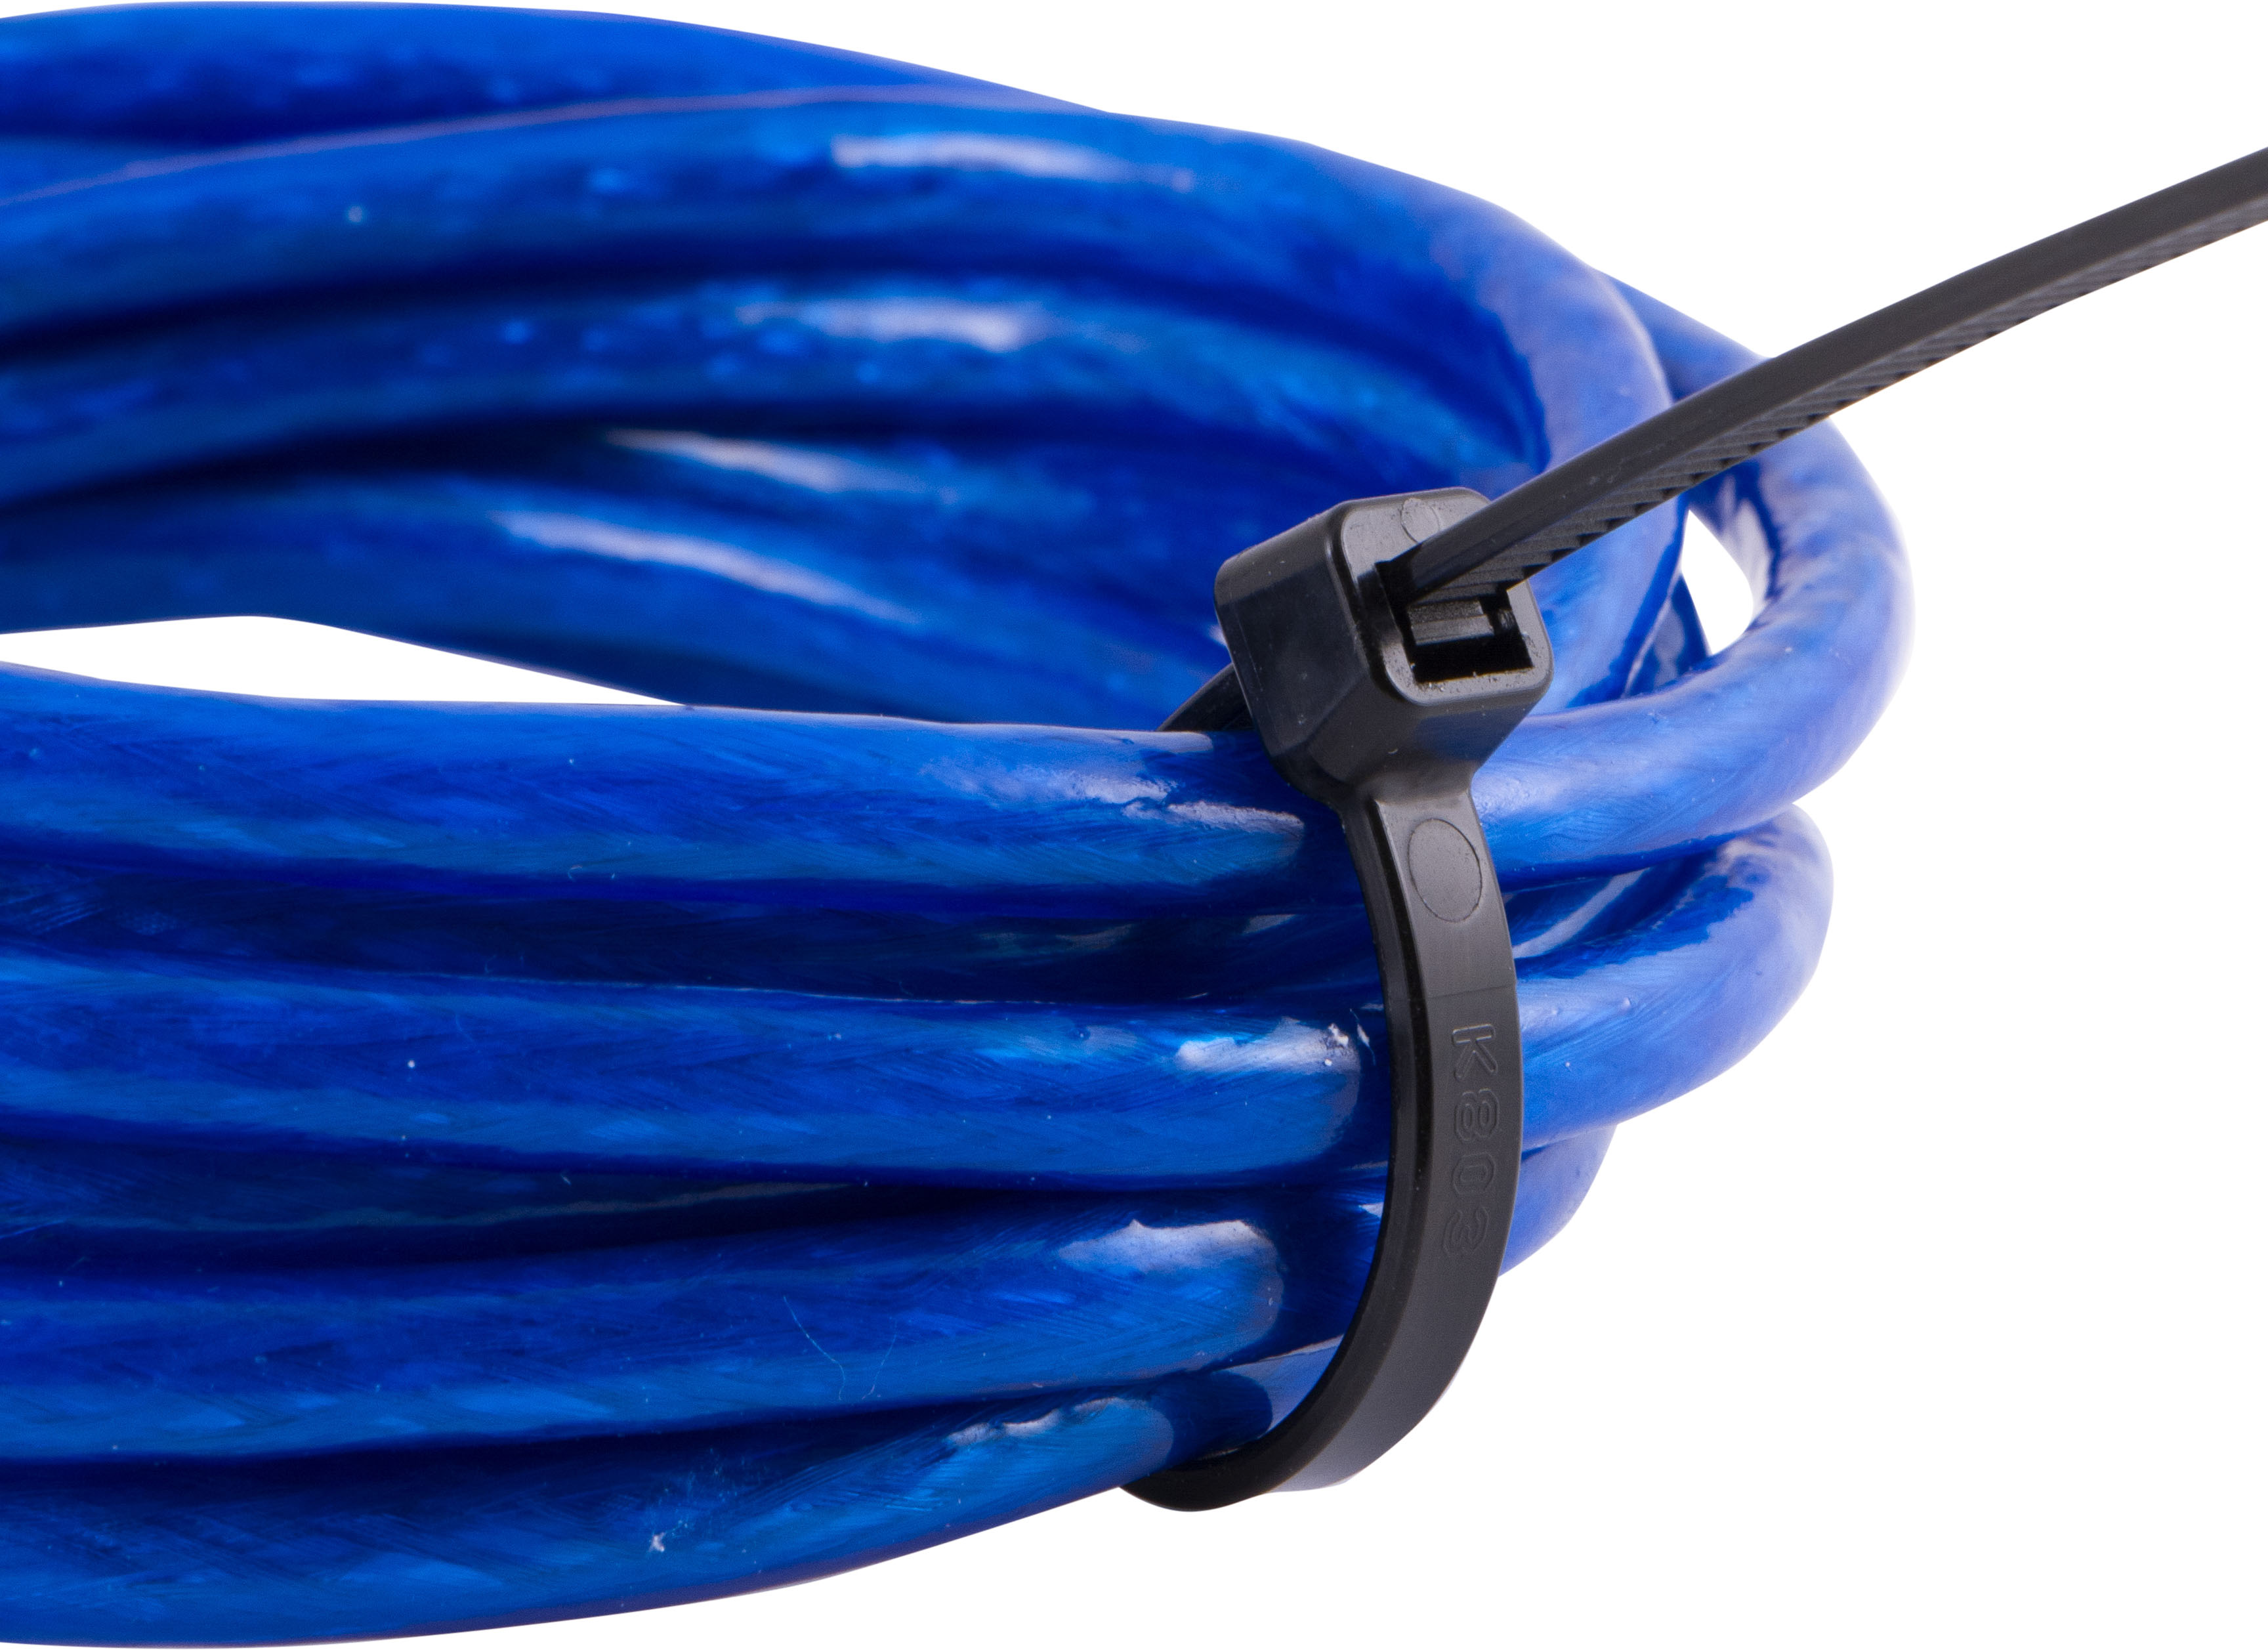 Hyper Tough 11in. Black Zip Ties 100 Pack, 75lb Tensile Strength, Nylon Mount Cable Ties, Resealable Bag, 25469 - image 3 of 7